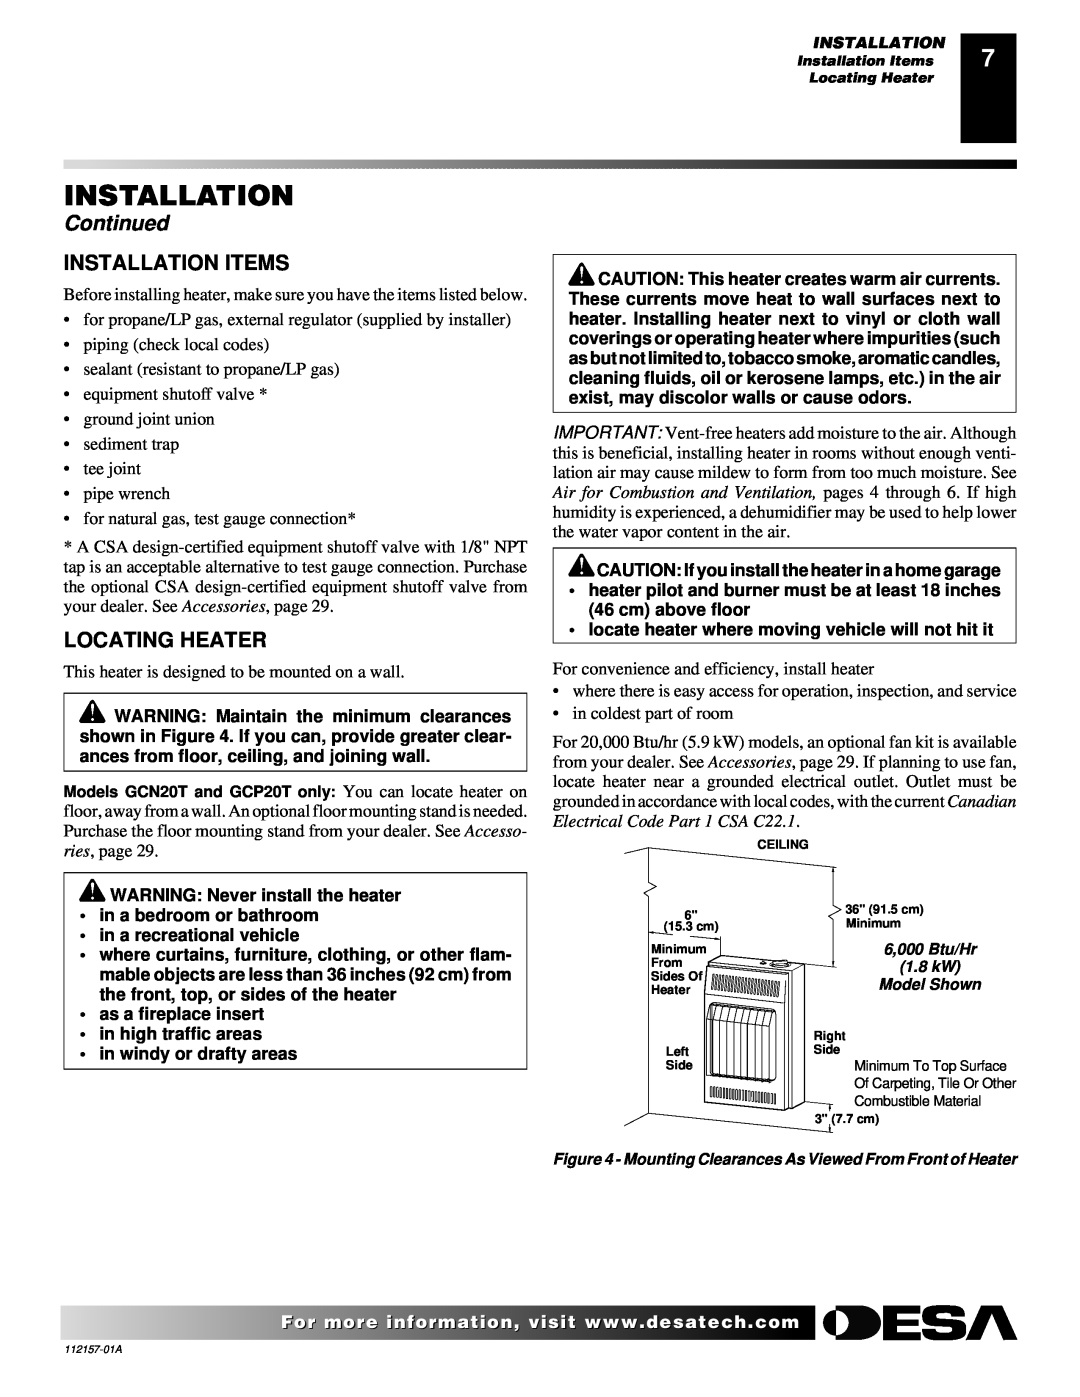 Desa GCP10TGCN20T, GCP6 GCN10T, GCP20T, GCN6 installation manual Installation Items, Locating Heater, Continued 